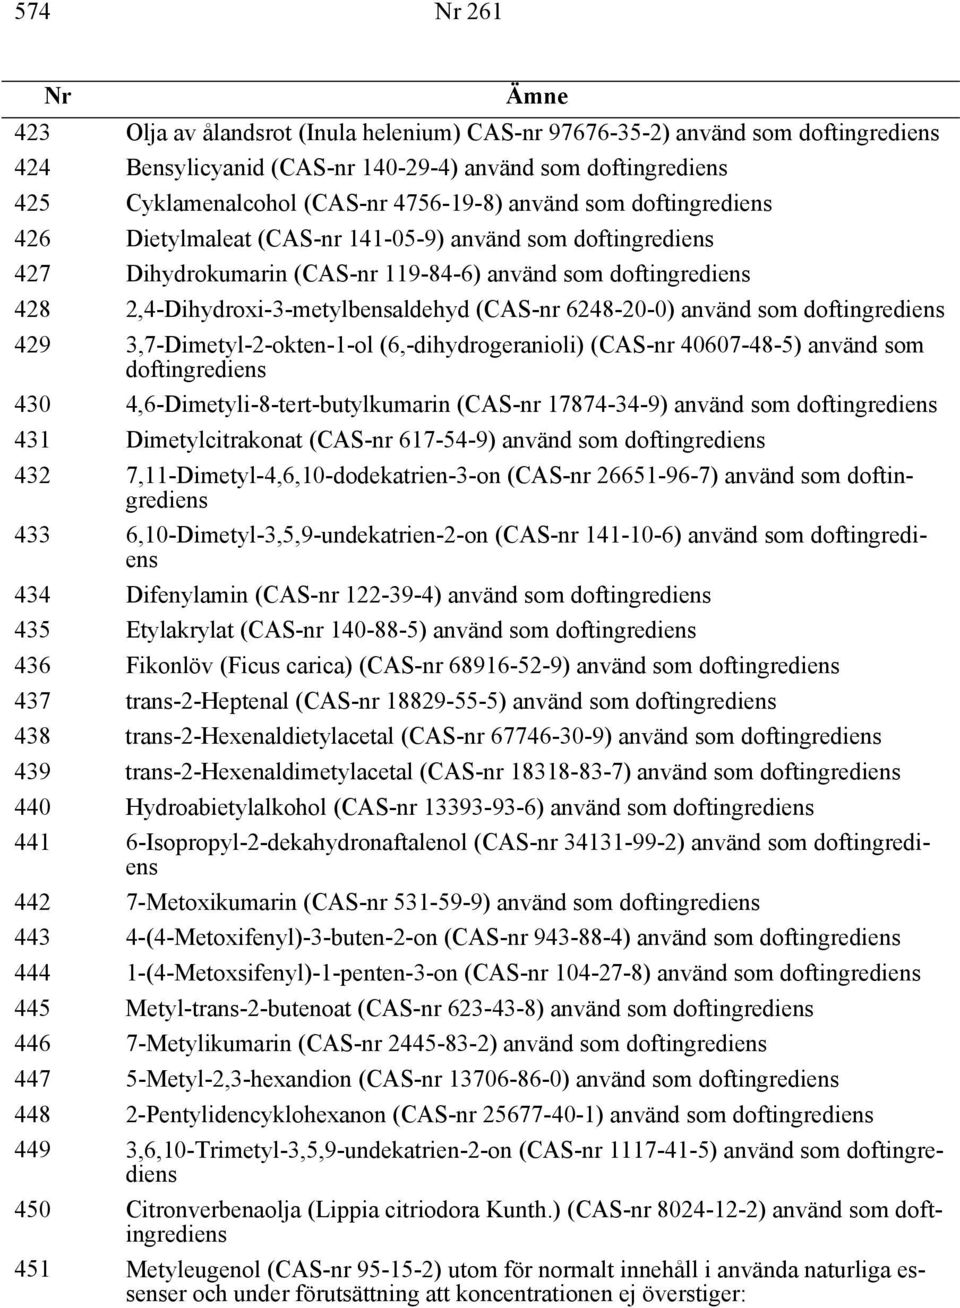 429 3,7-Dimetyl-2-okten-1-ol (6,-dihydrogeranioli) 40607-48-5) använd som doftingrediens 430 4,6-Dimetyli-8-tert-butylkumarin 17874-34-9) använd som doftingrediens 431 Dimetylcitrakonat 617-54-9)